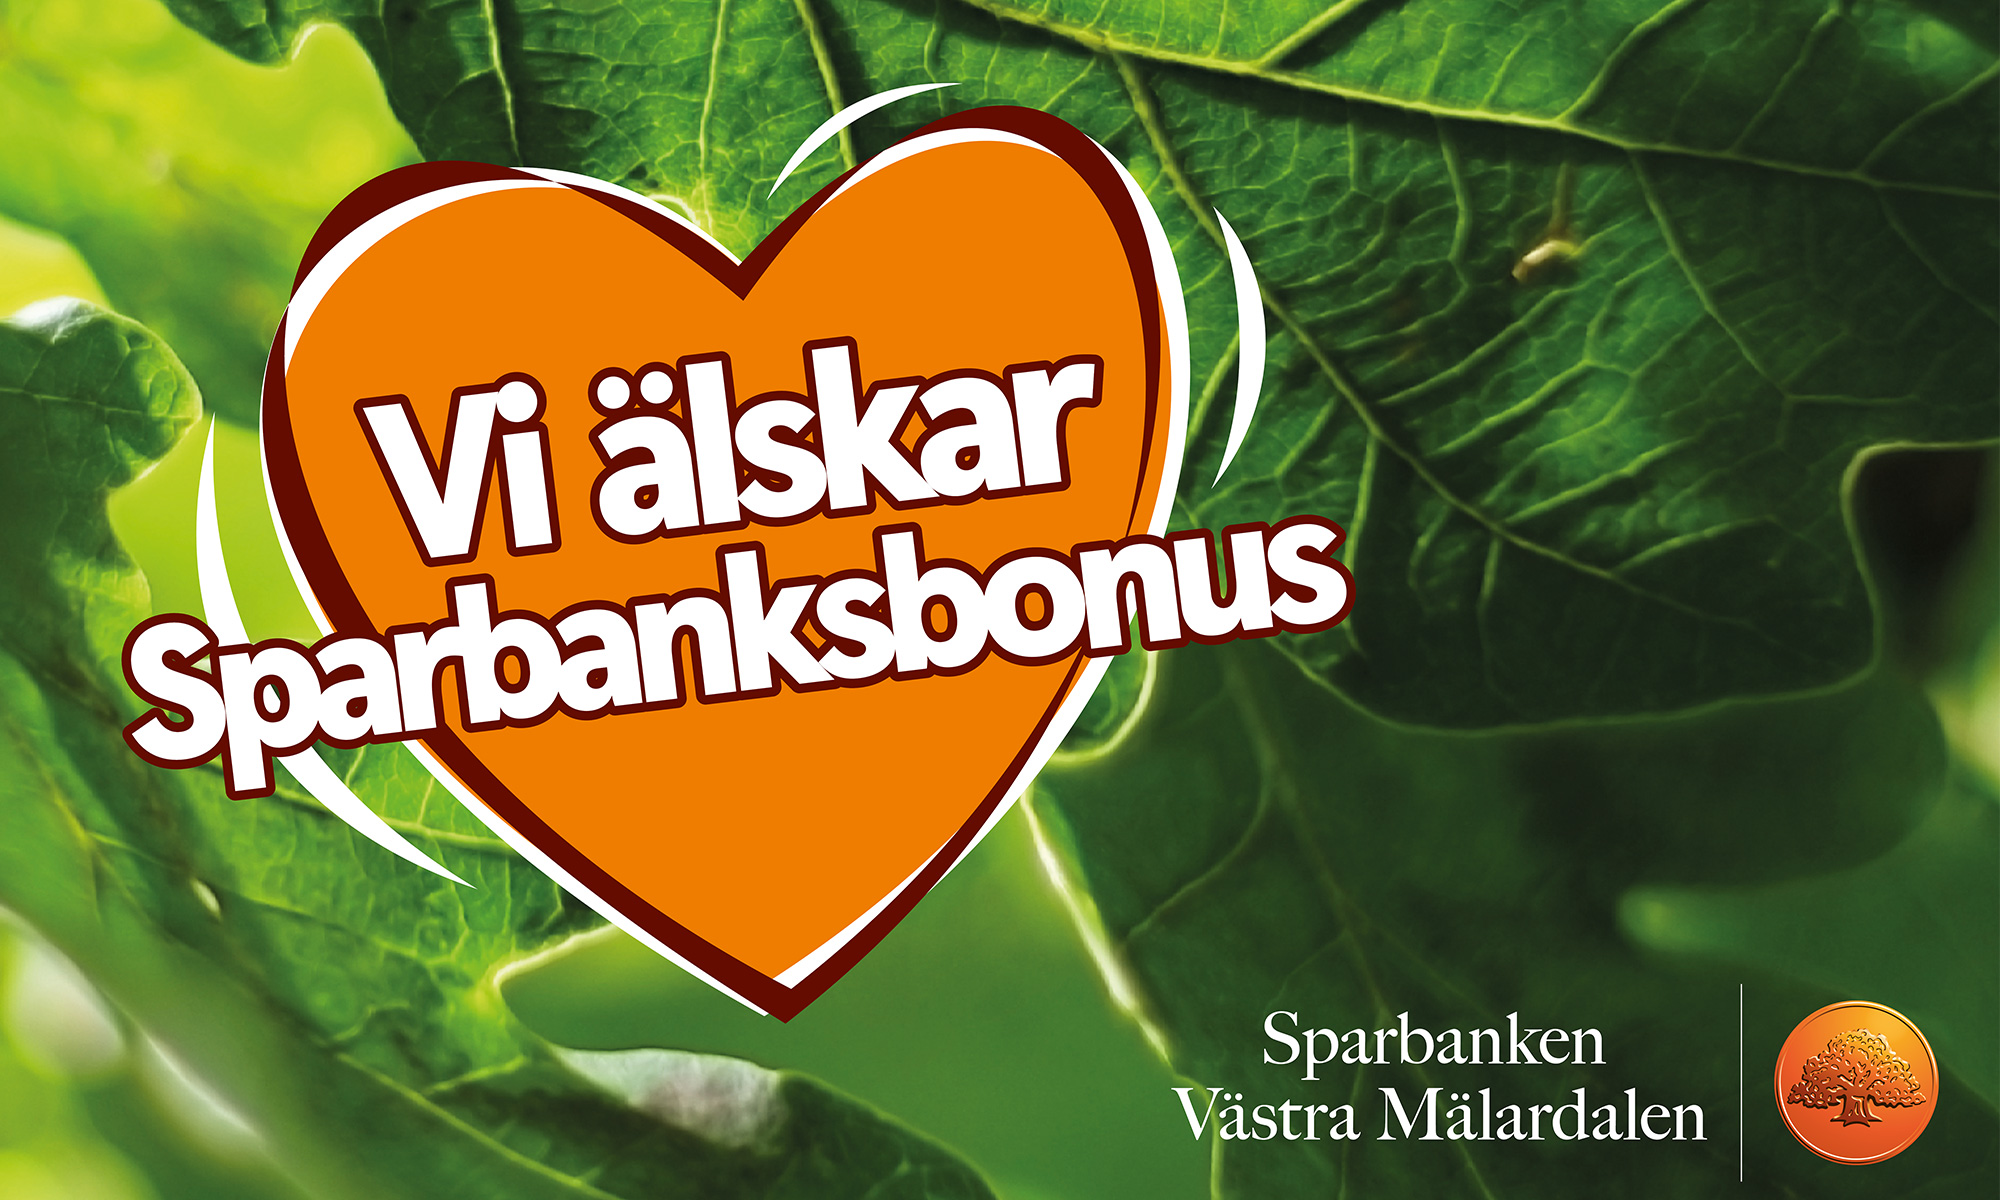 Oak leaves background, orange heart with text Sparbanksbonus